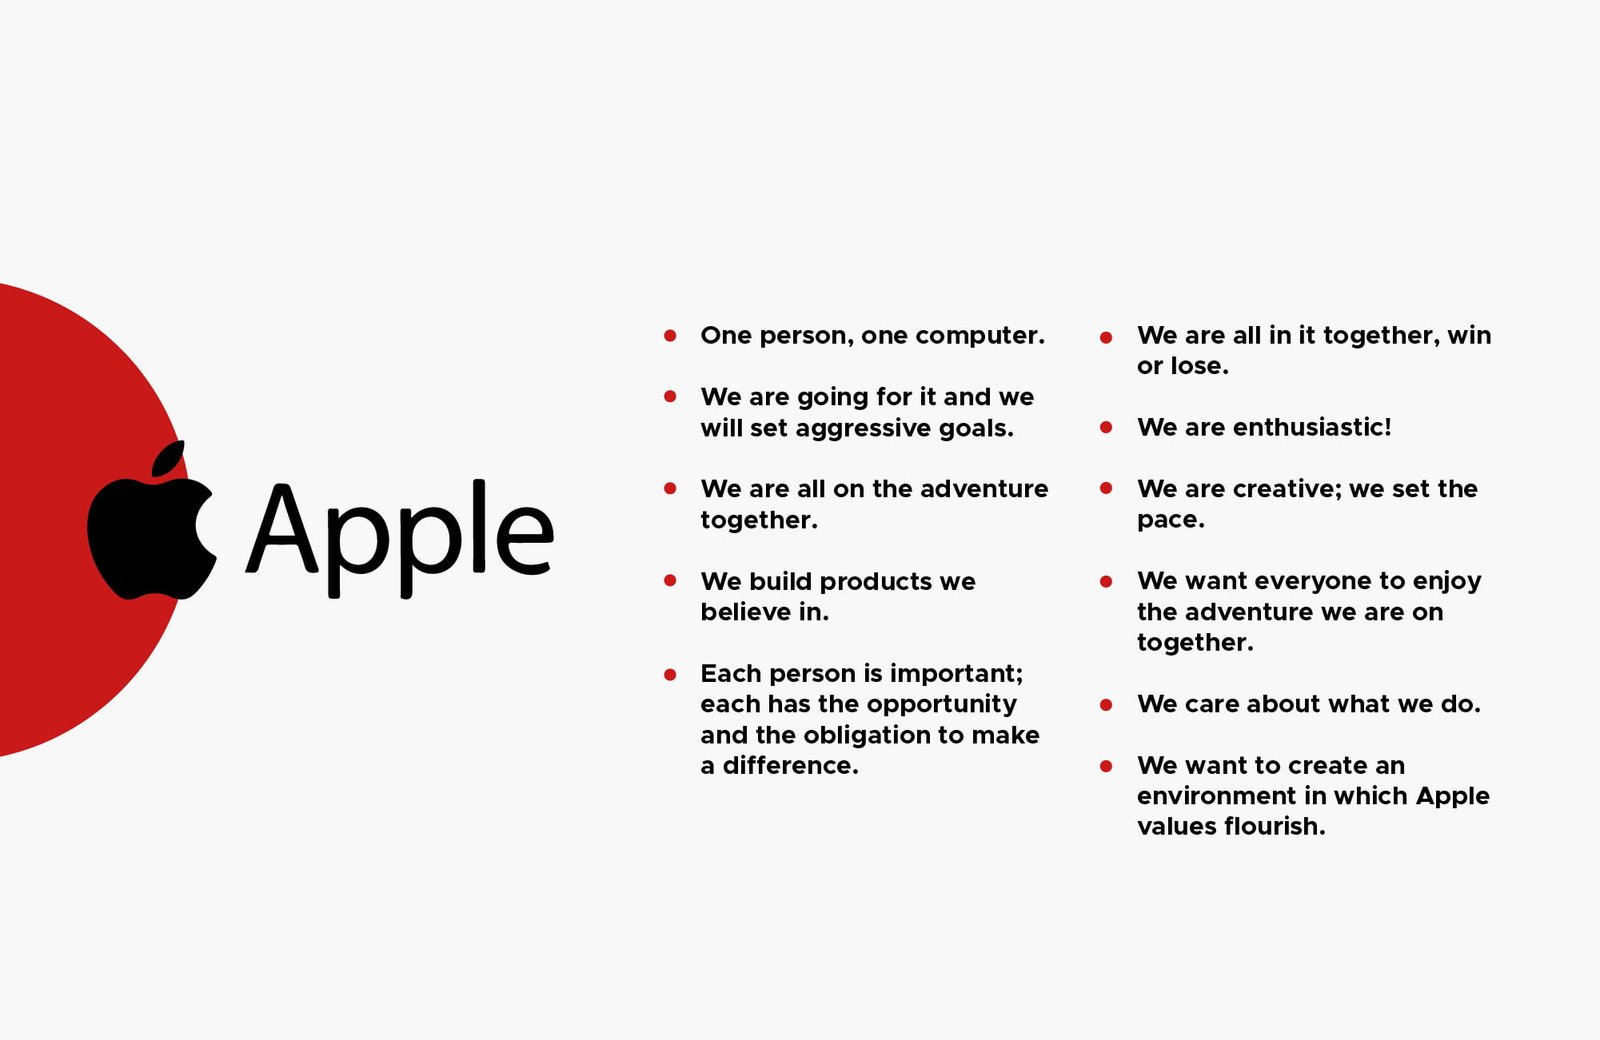 apple brand values - Hamdi designs